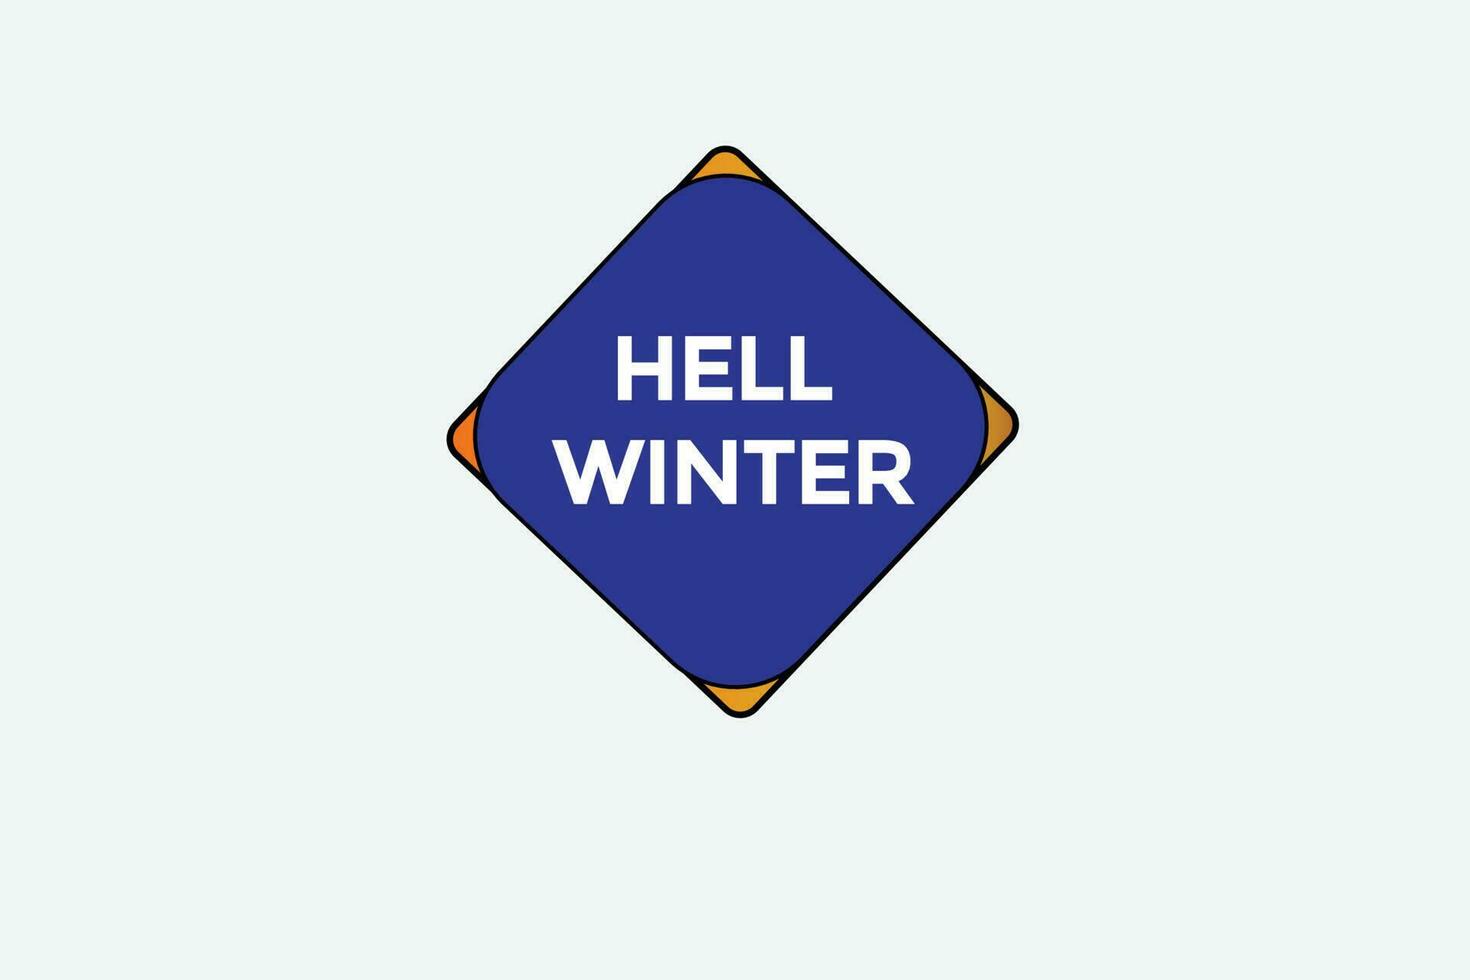 hello winter vectors.sign label bubble speech hello winter vector